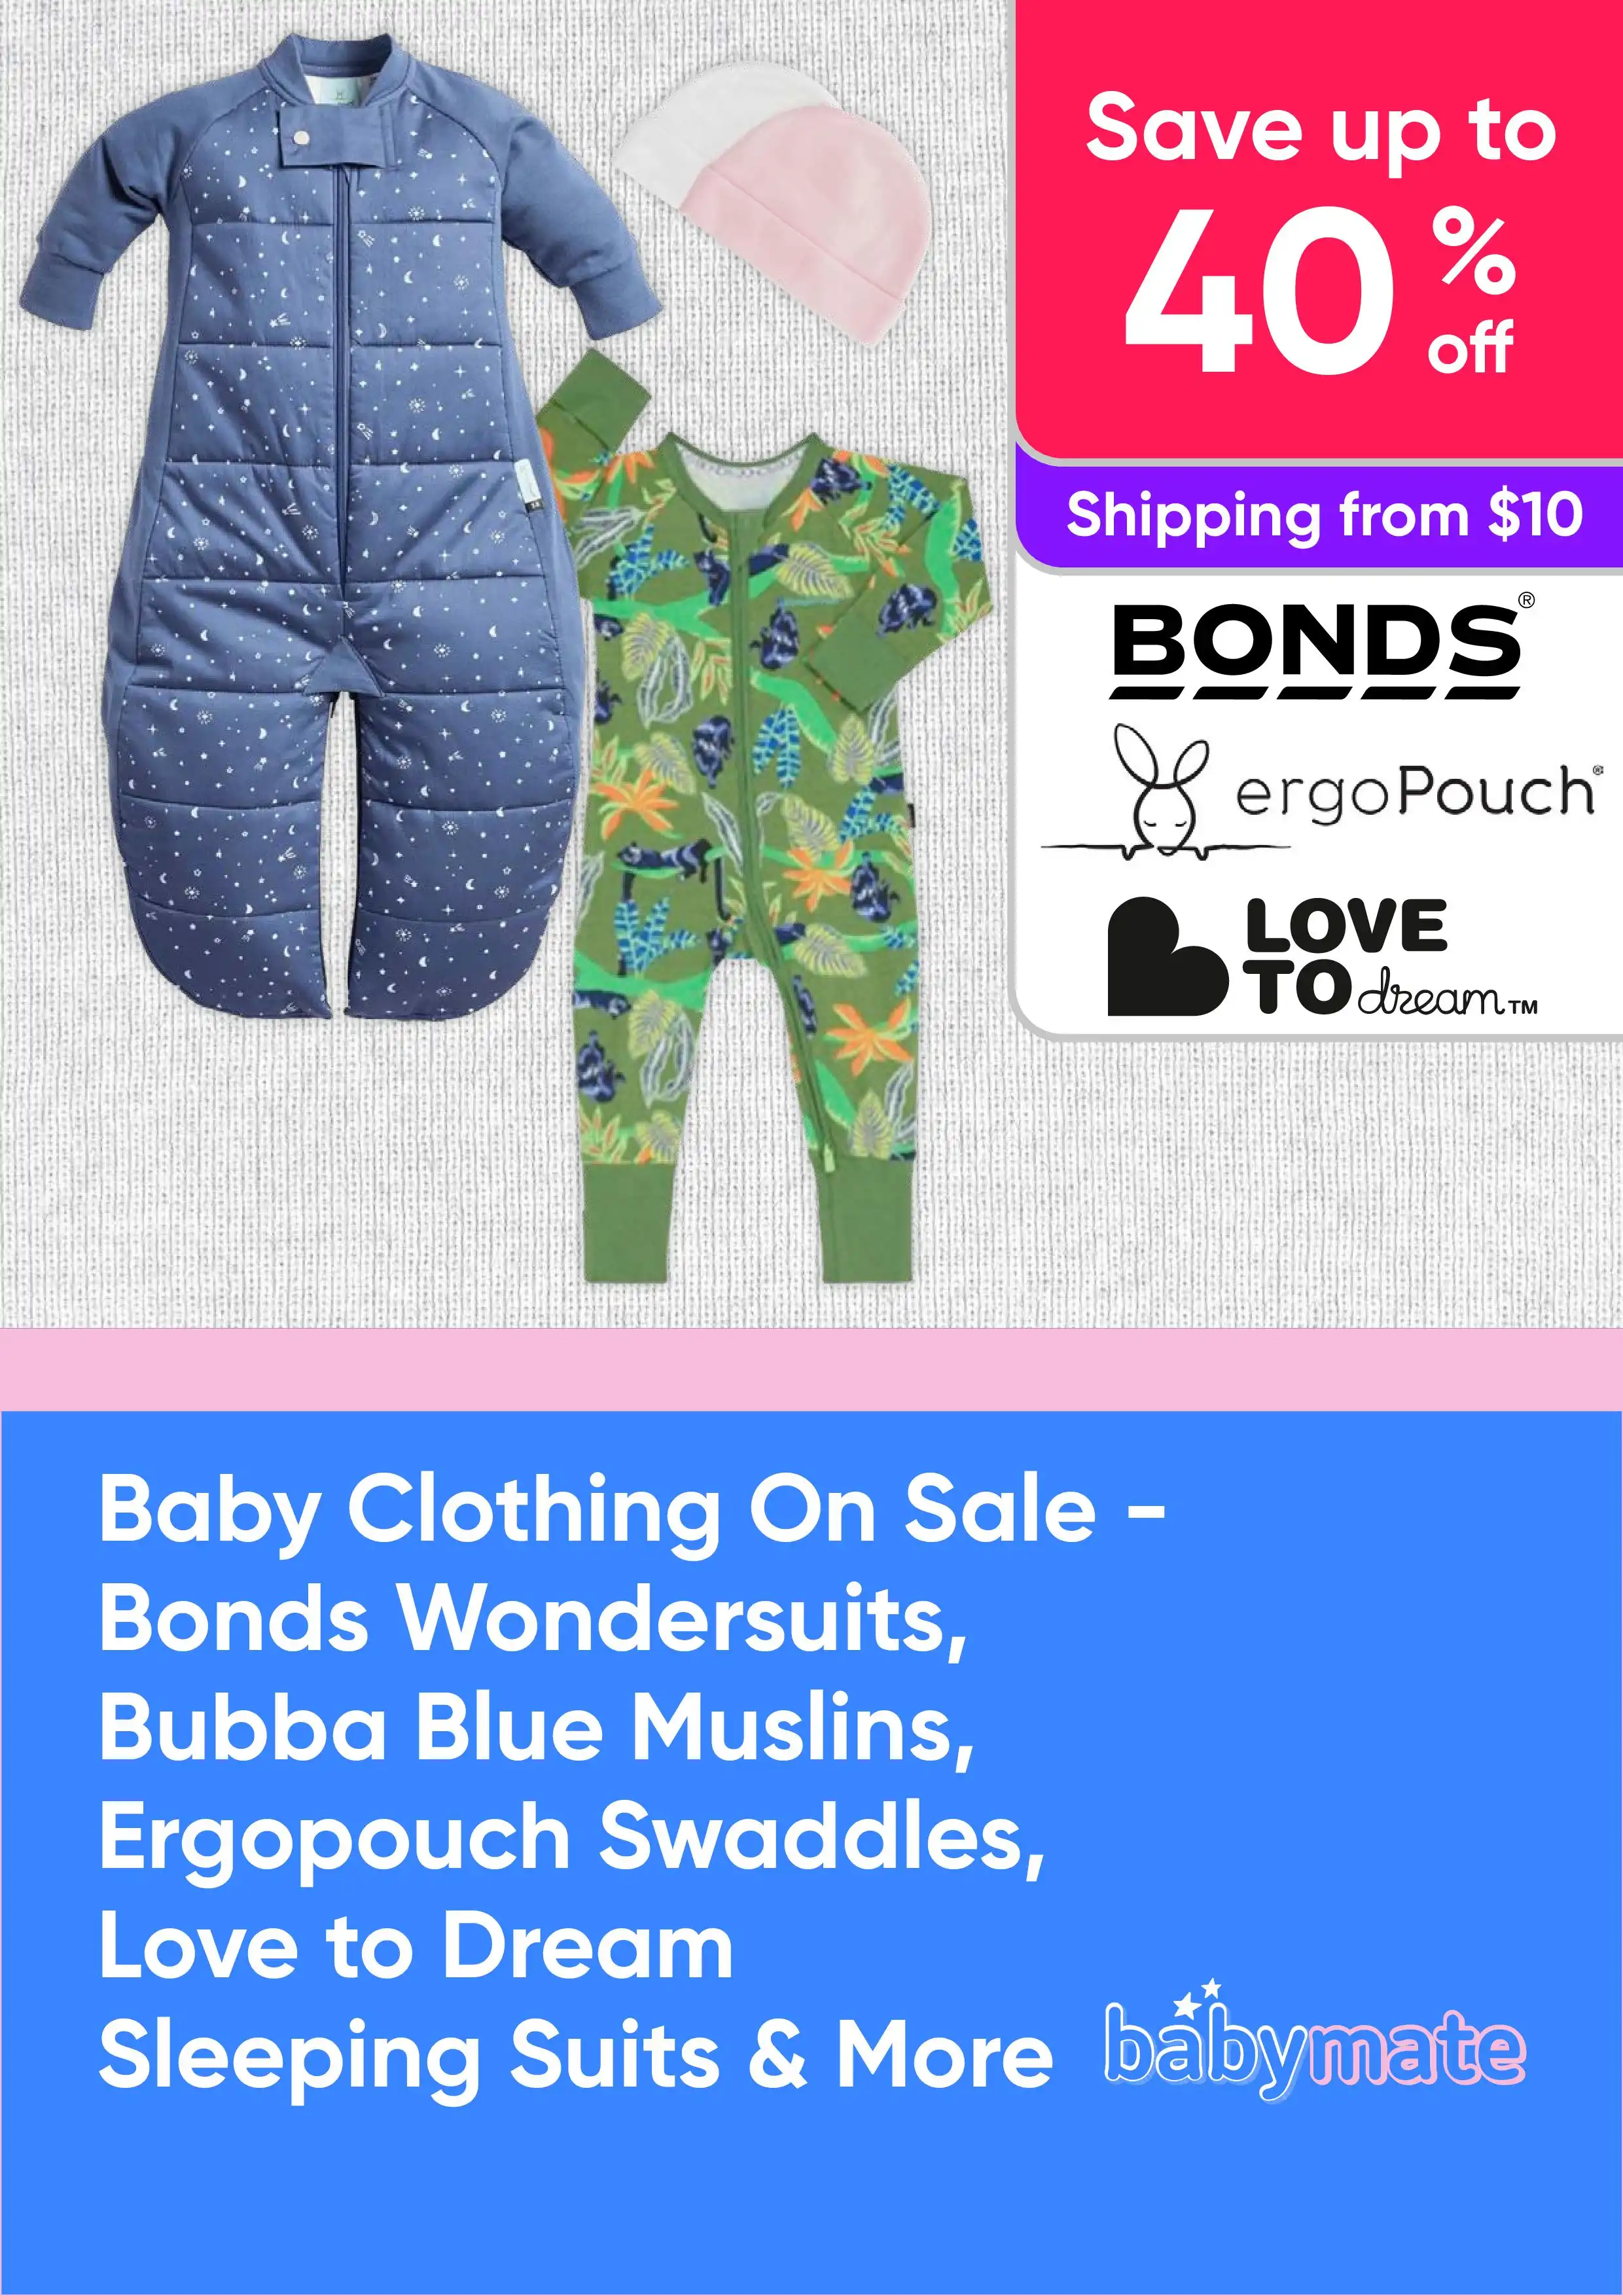 Baby Clothing On Sale - Shop Bonds Wondersuits, Bubba Blue Muslins & More